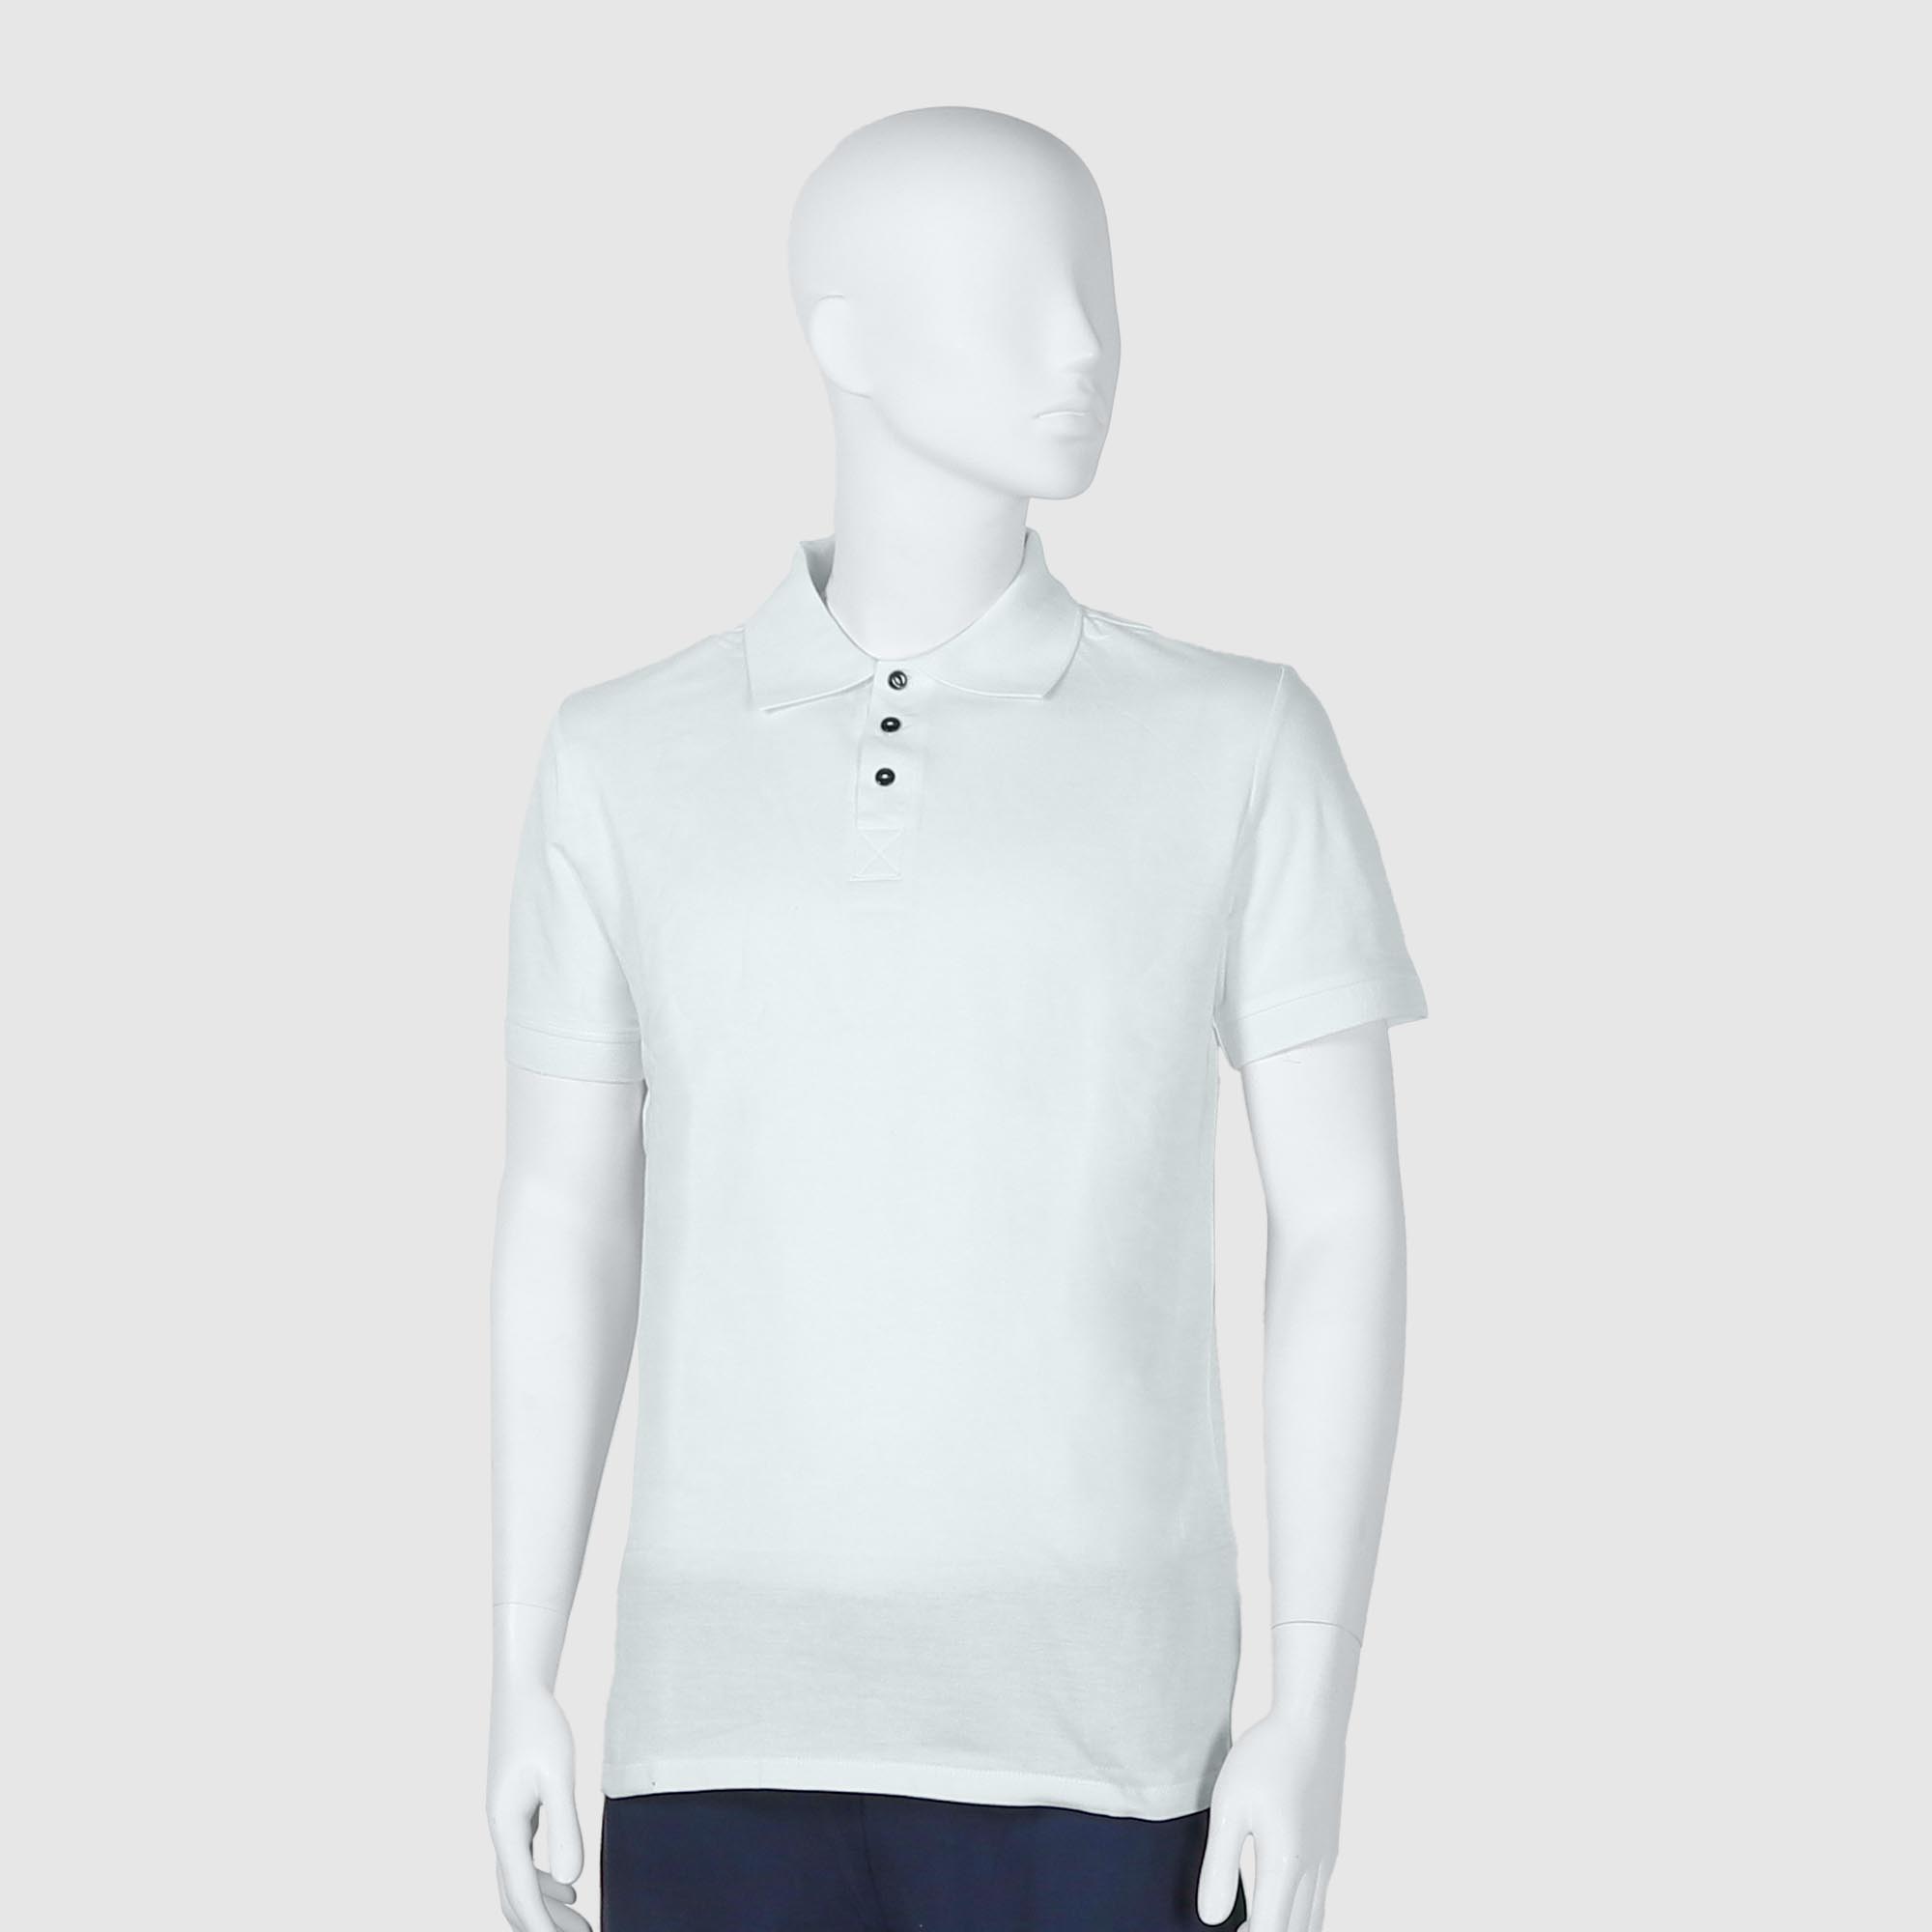 Мужская футболка-поло Diva Teks белая (DTD-07), цвет белый, размер 46-48